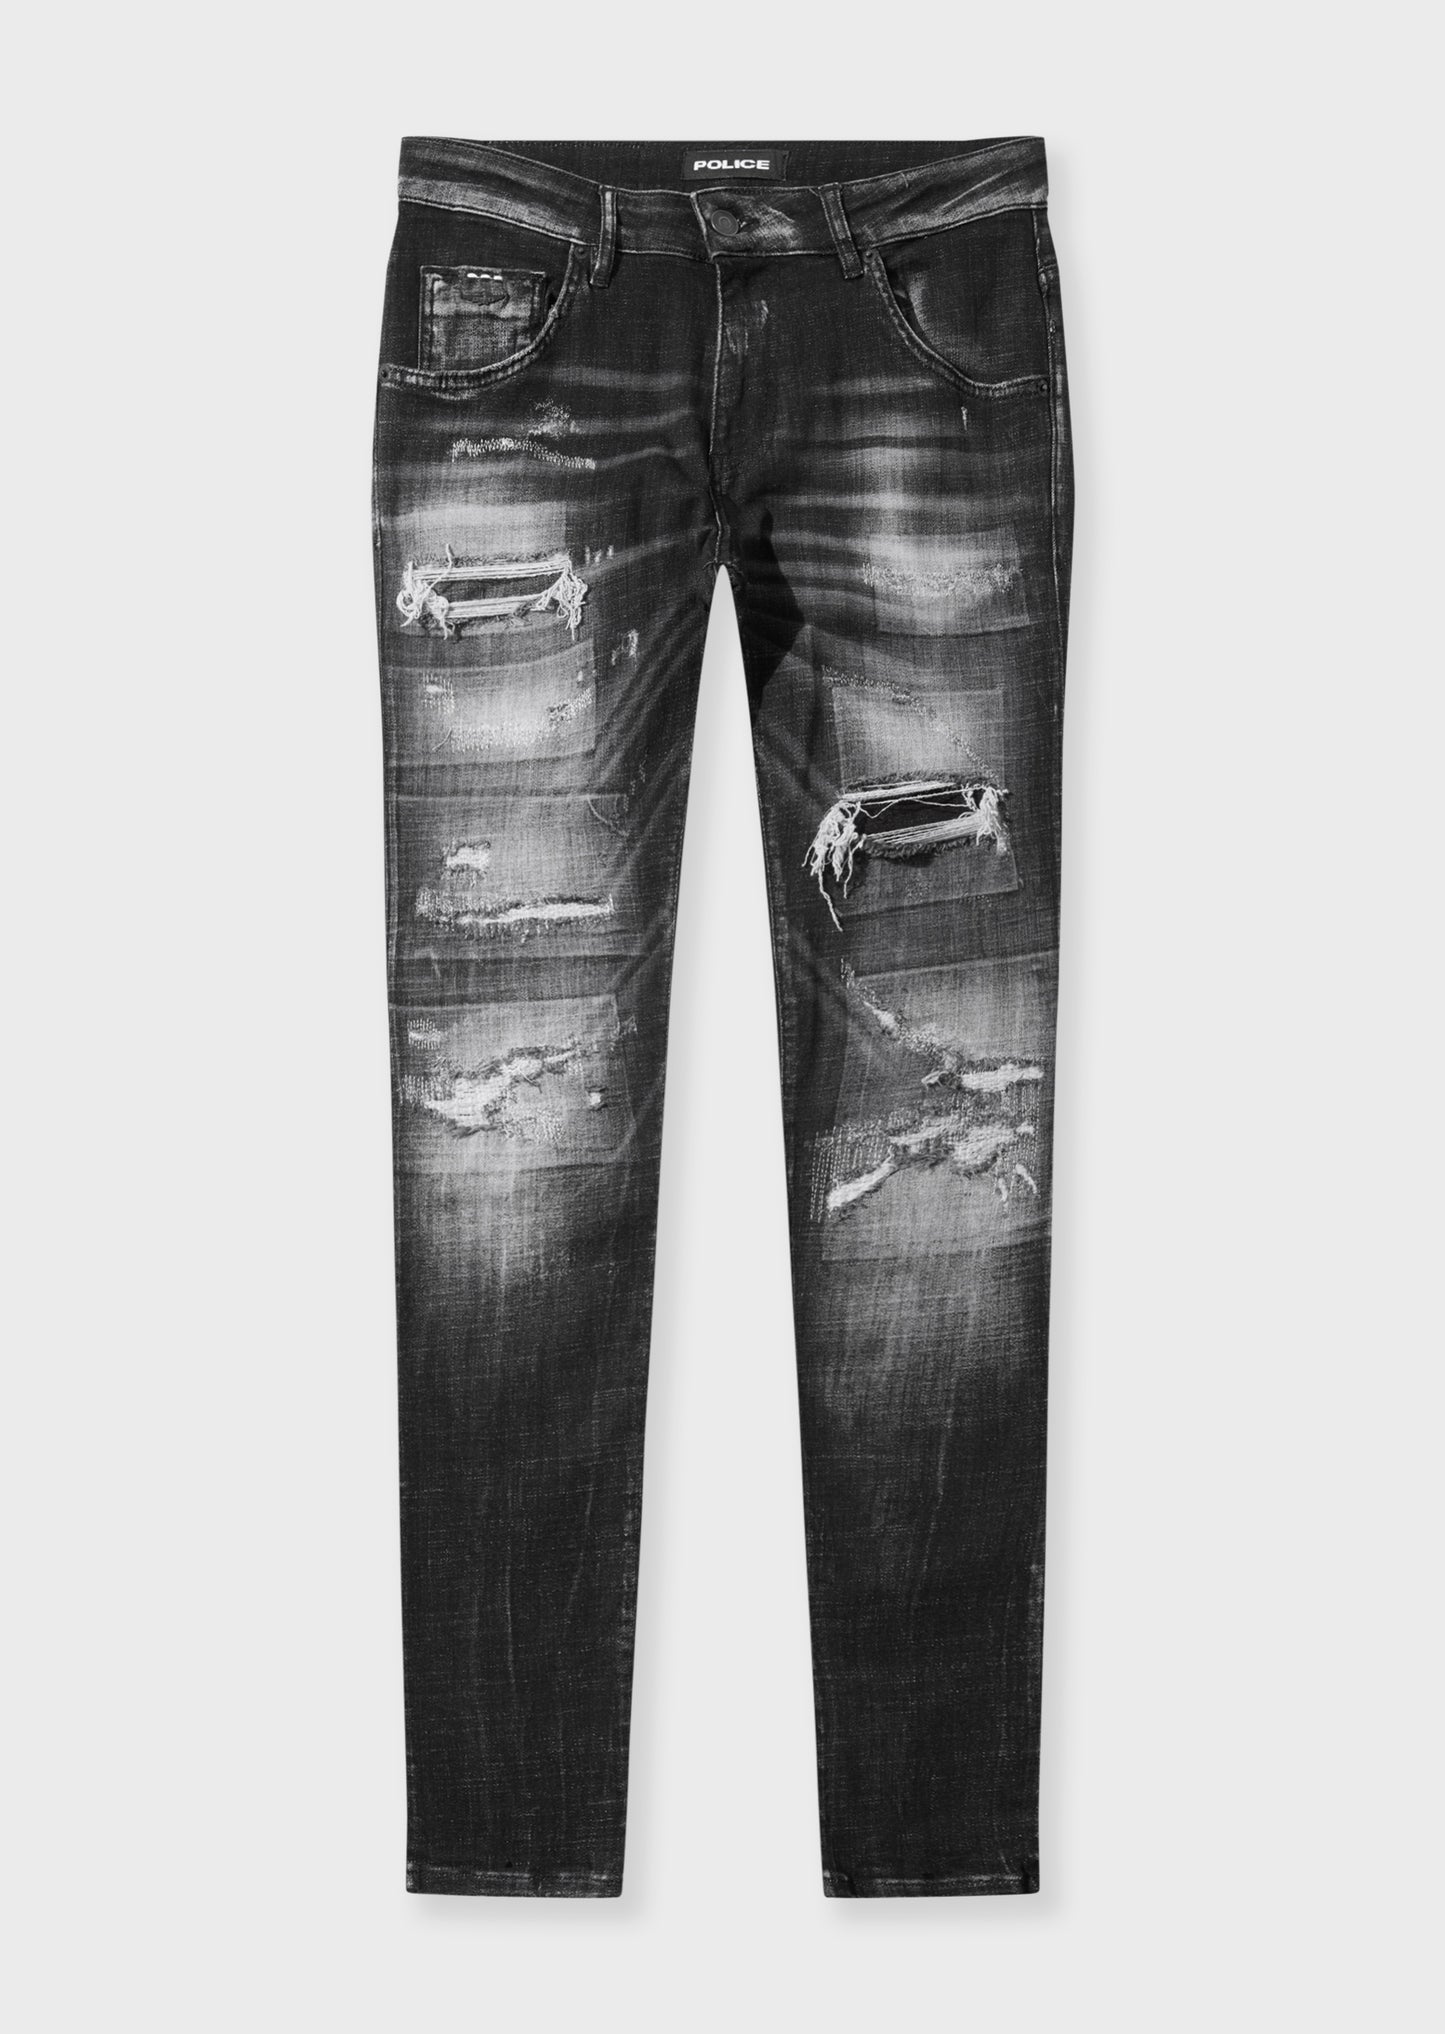 Deniro Lat 976 Slim Fit Jeans